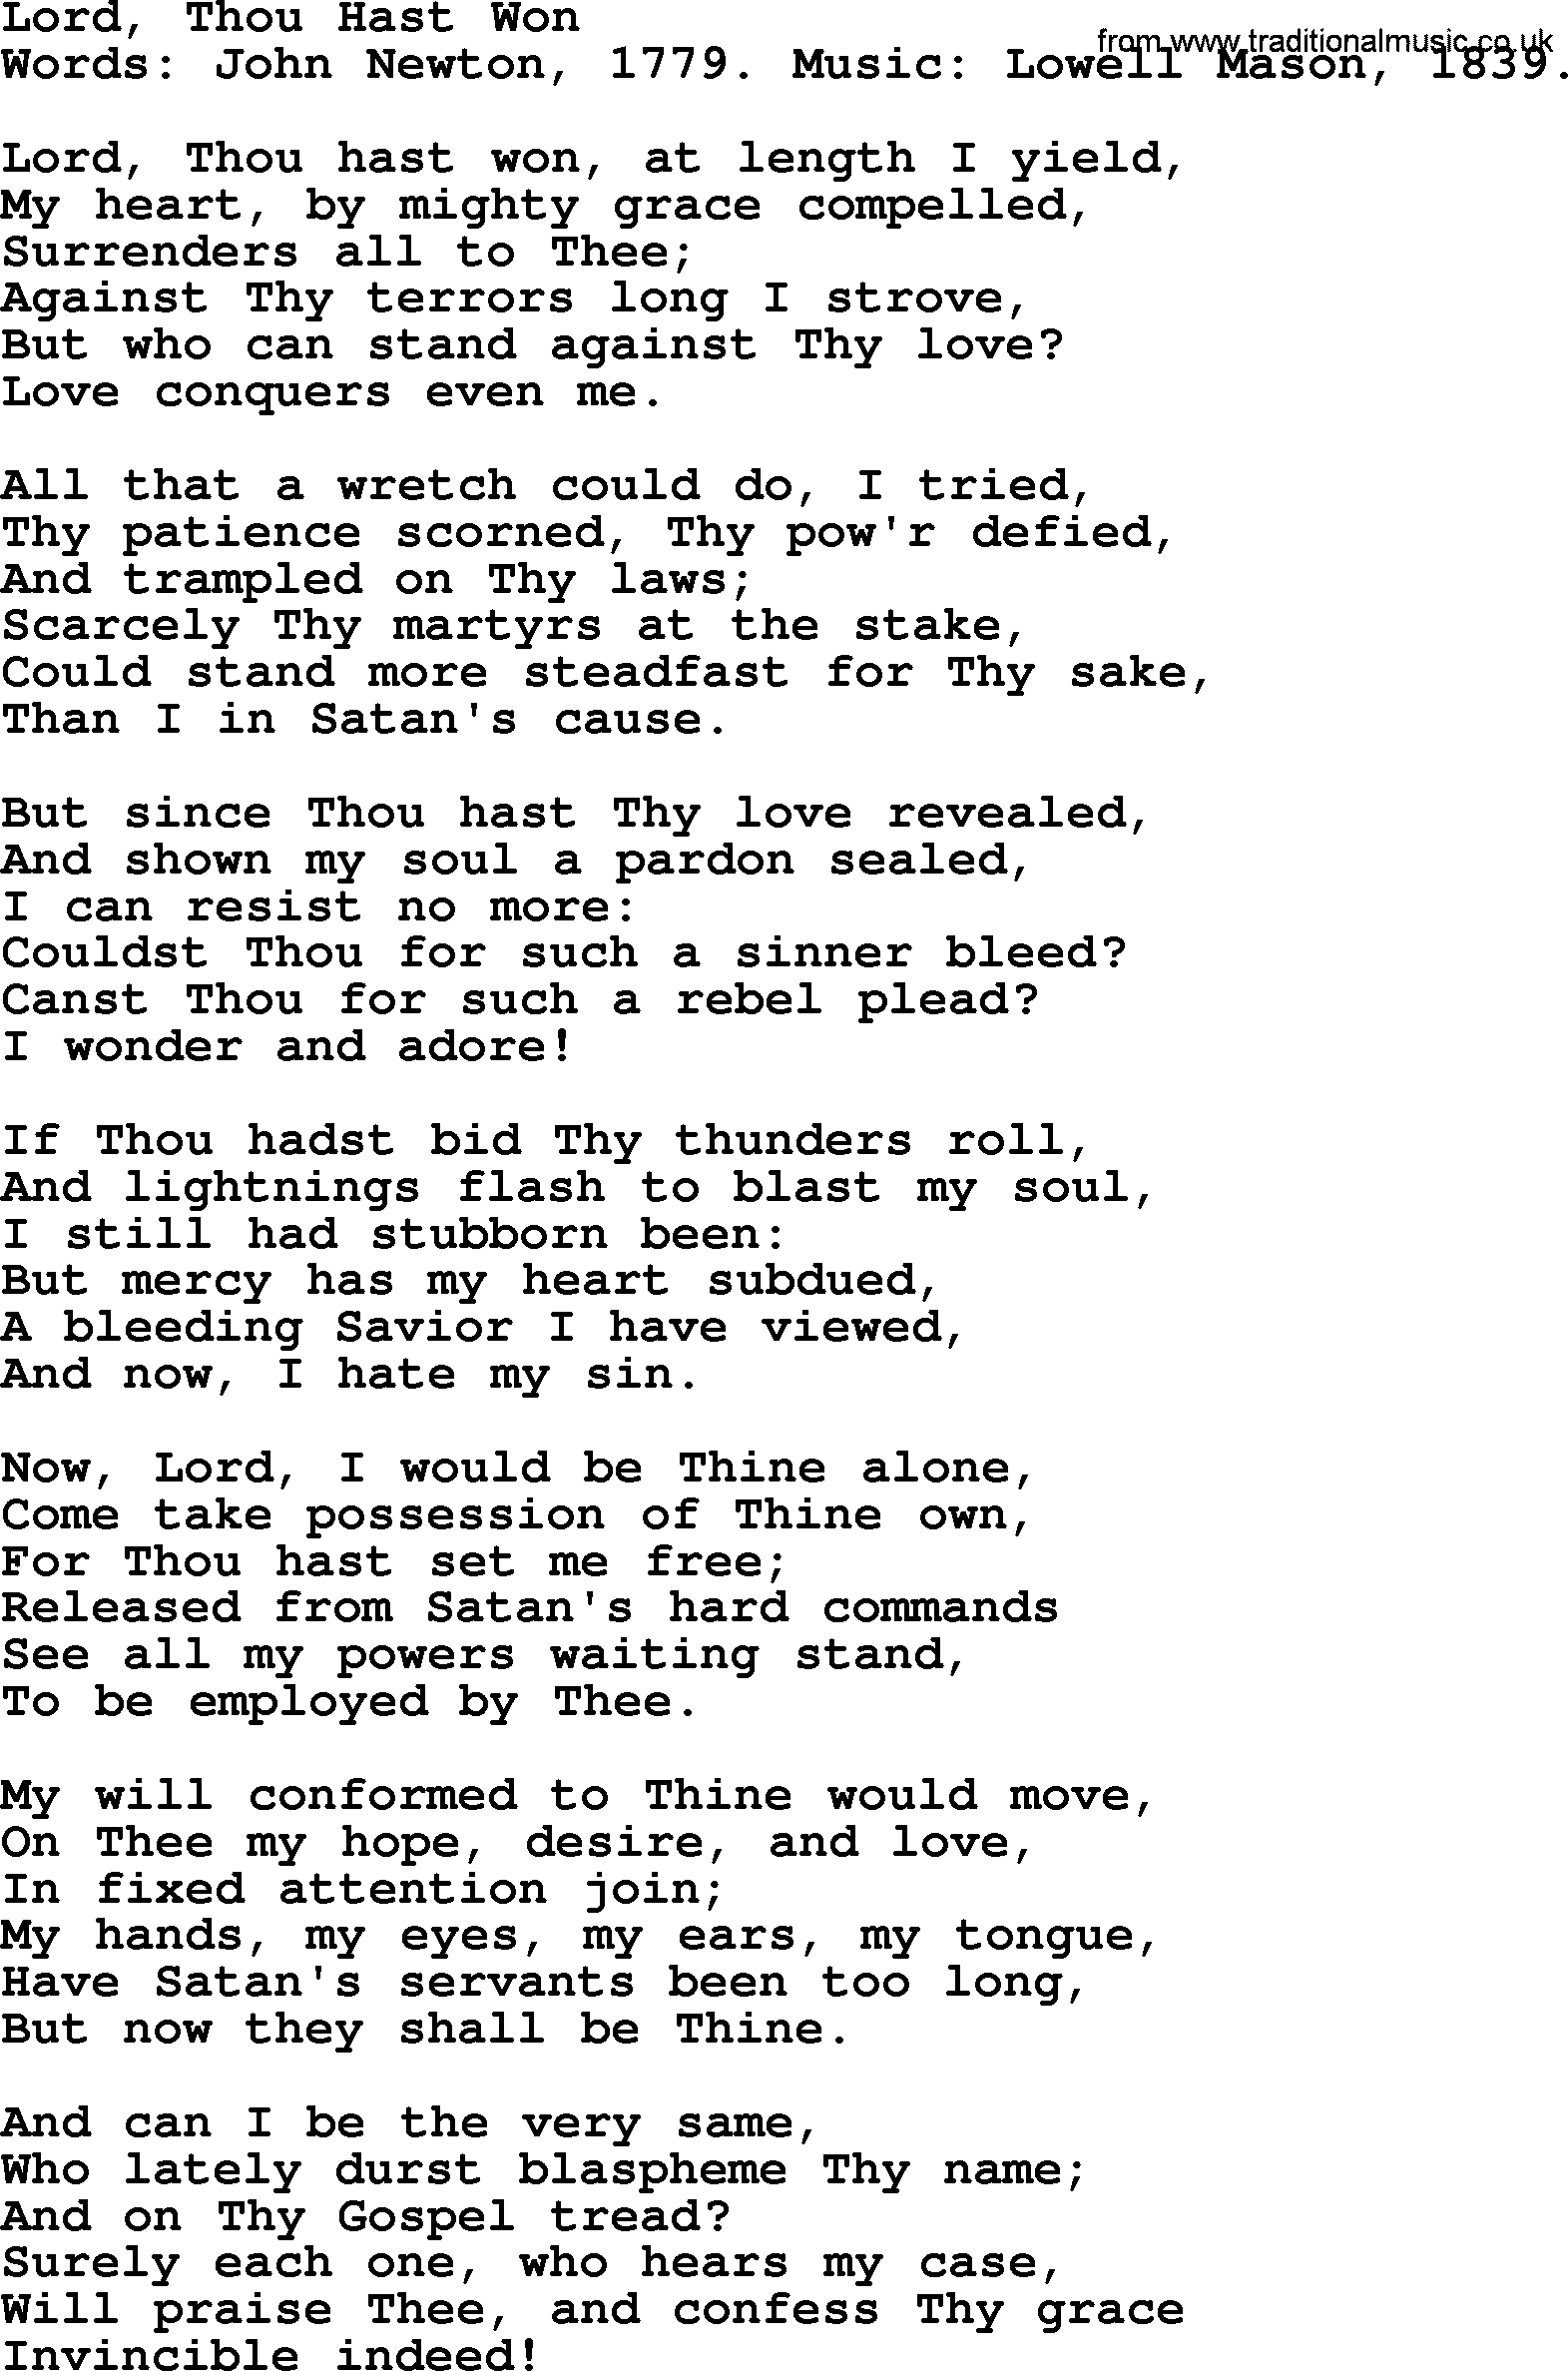 John Newton hymn: Lord, Thou Hast Won, lyrics